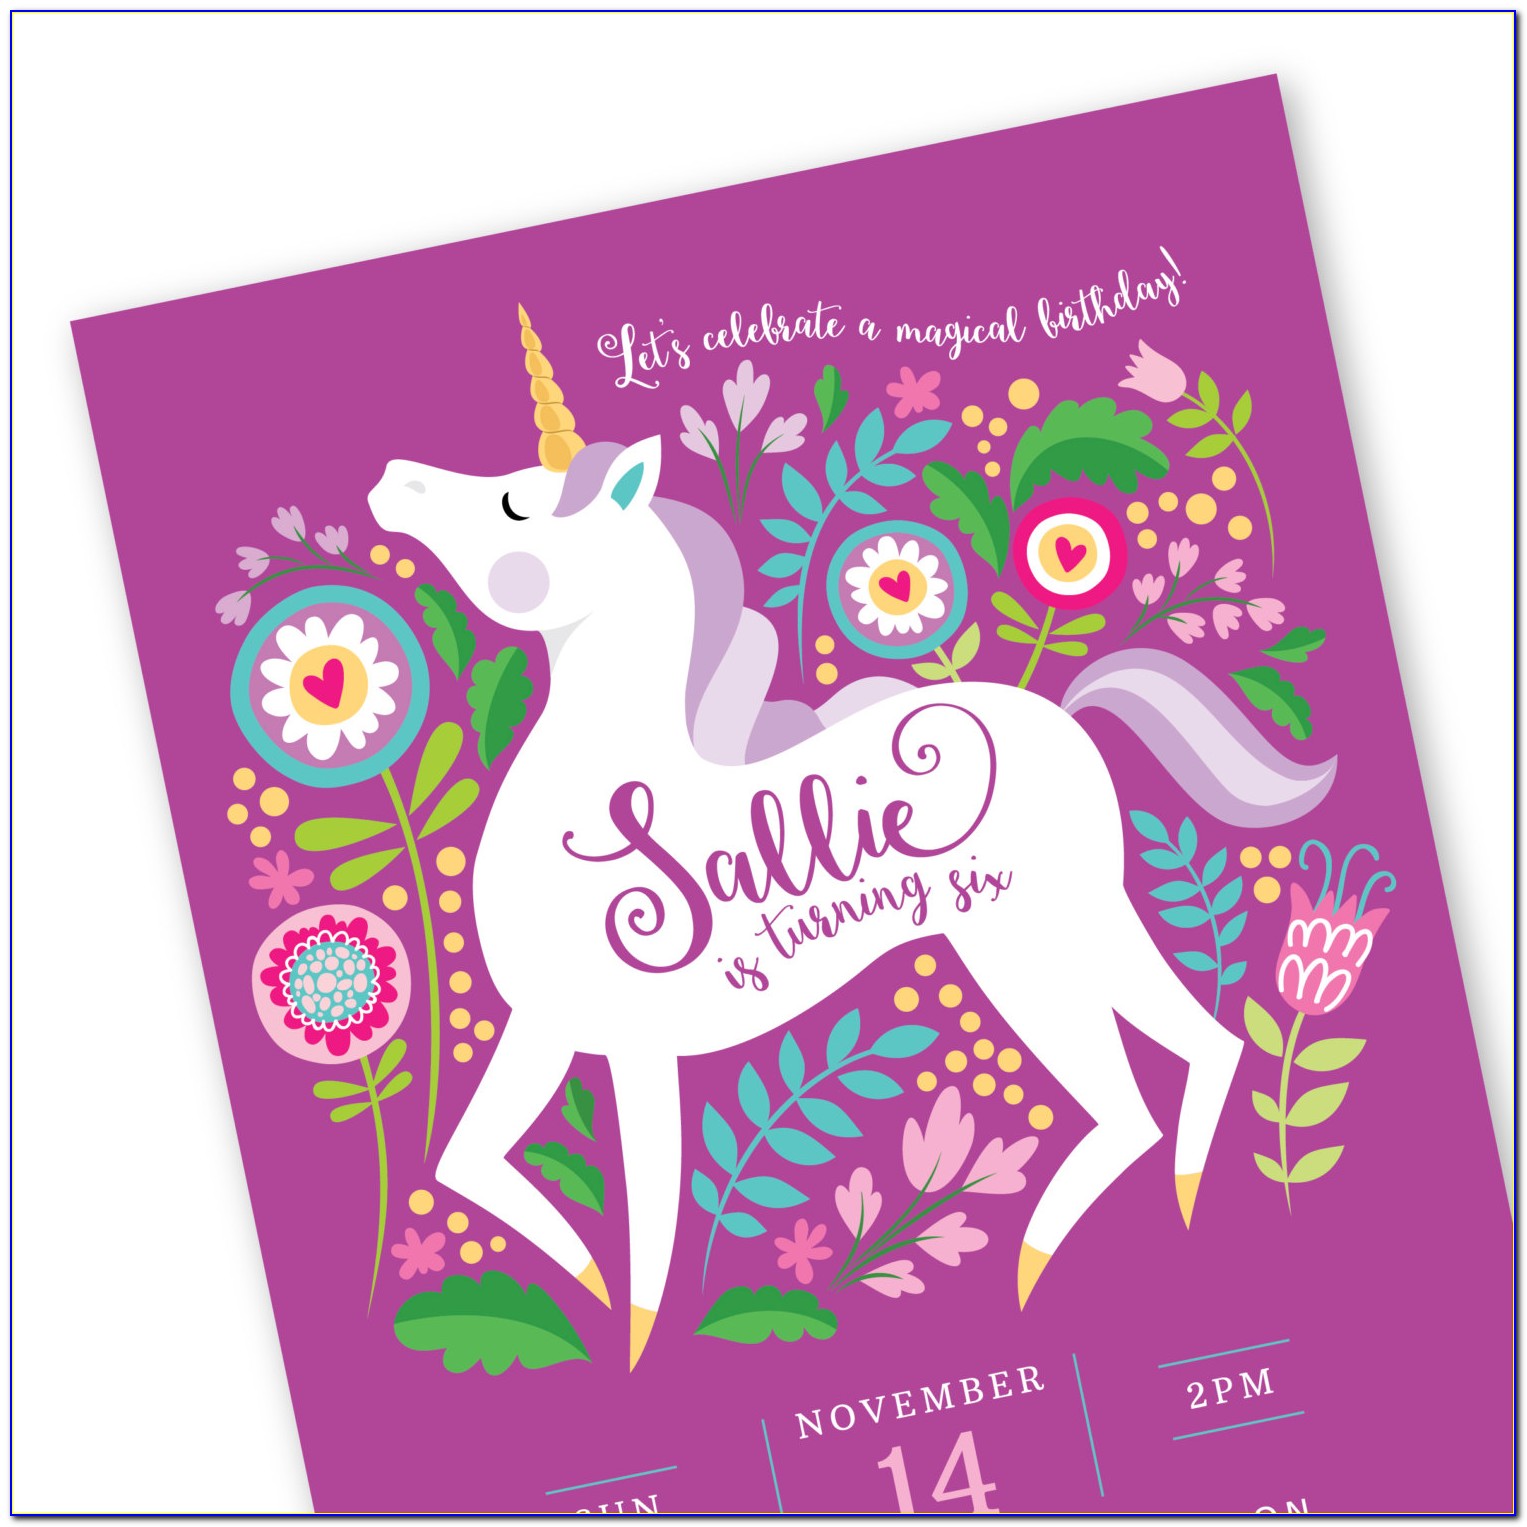 Free Printable Unicorn Birthday Invitation Templates